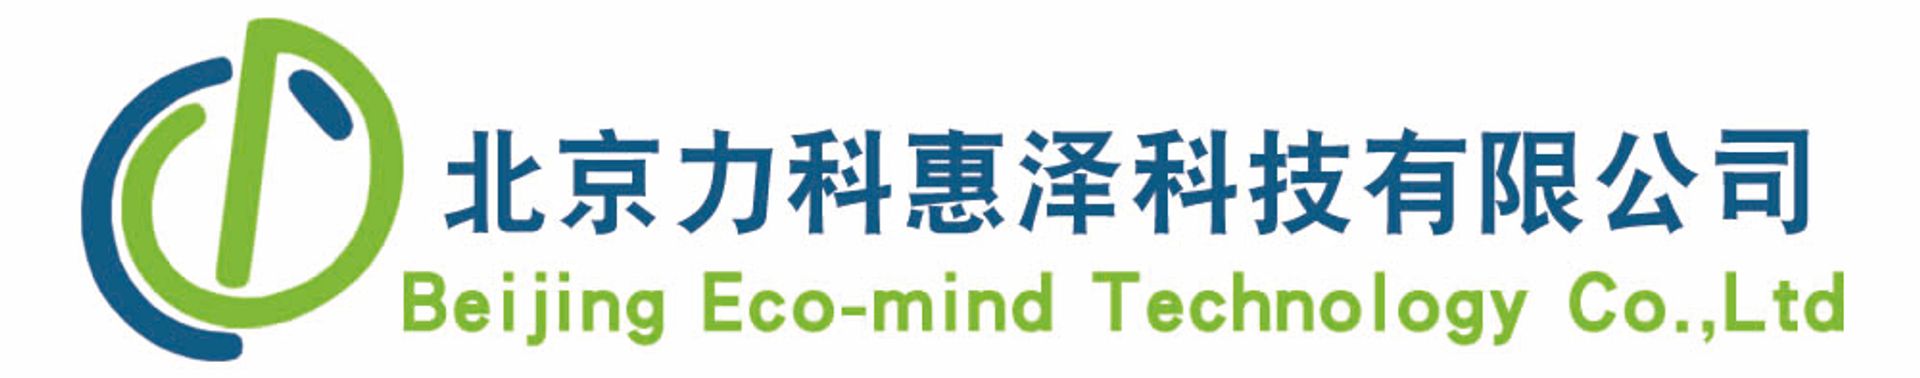 Beijing Eco-mind Technology Co., Ltd